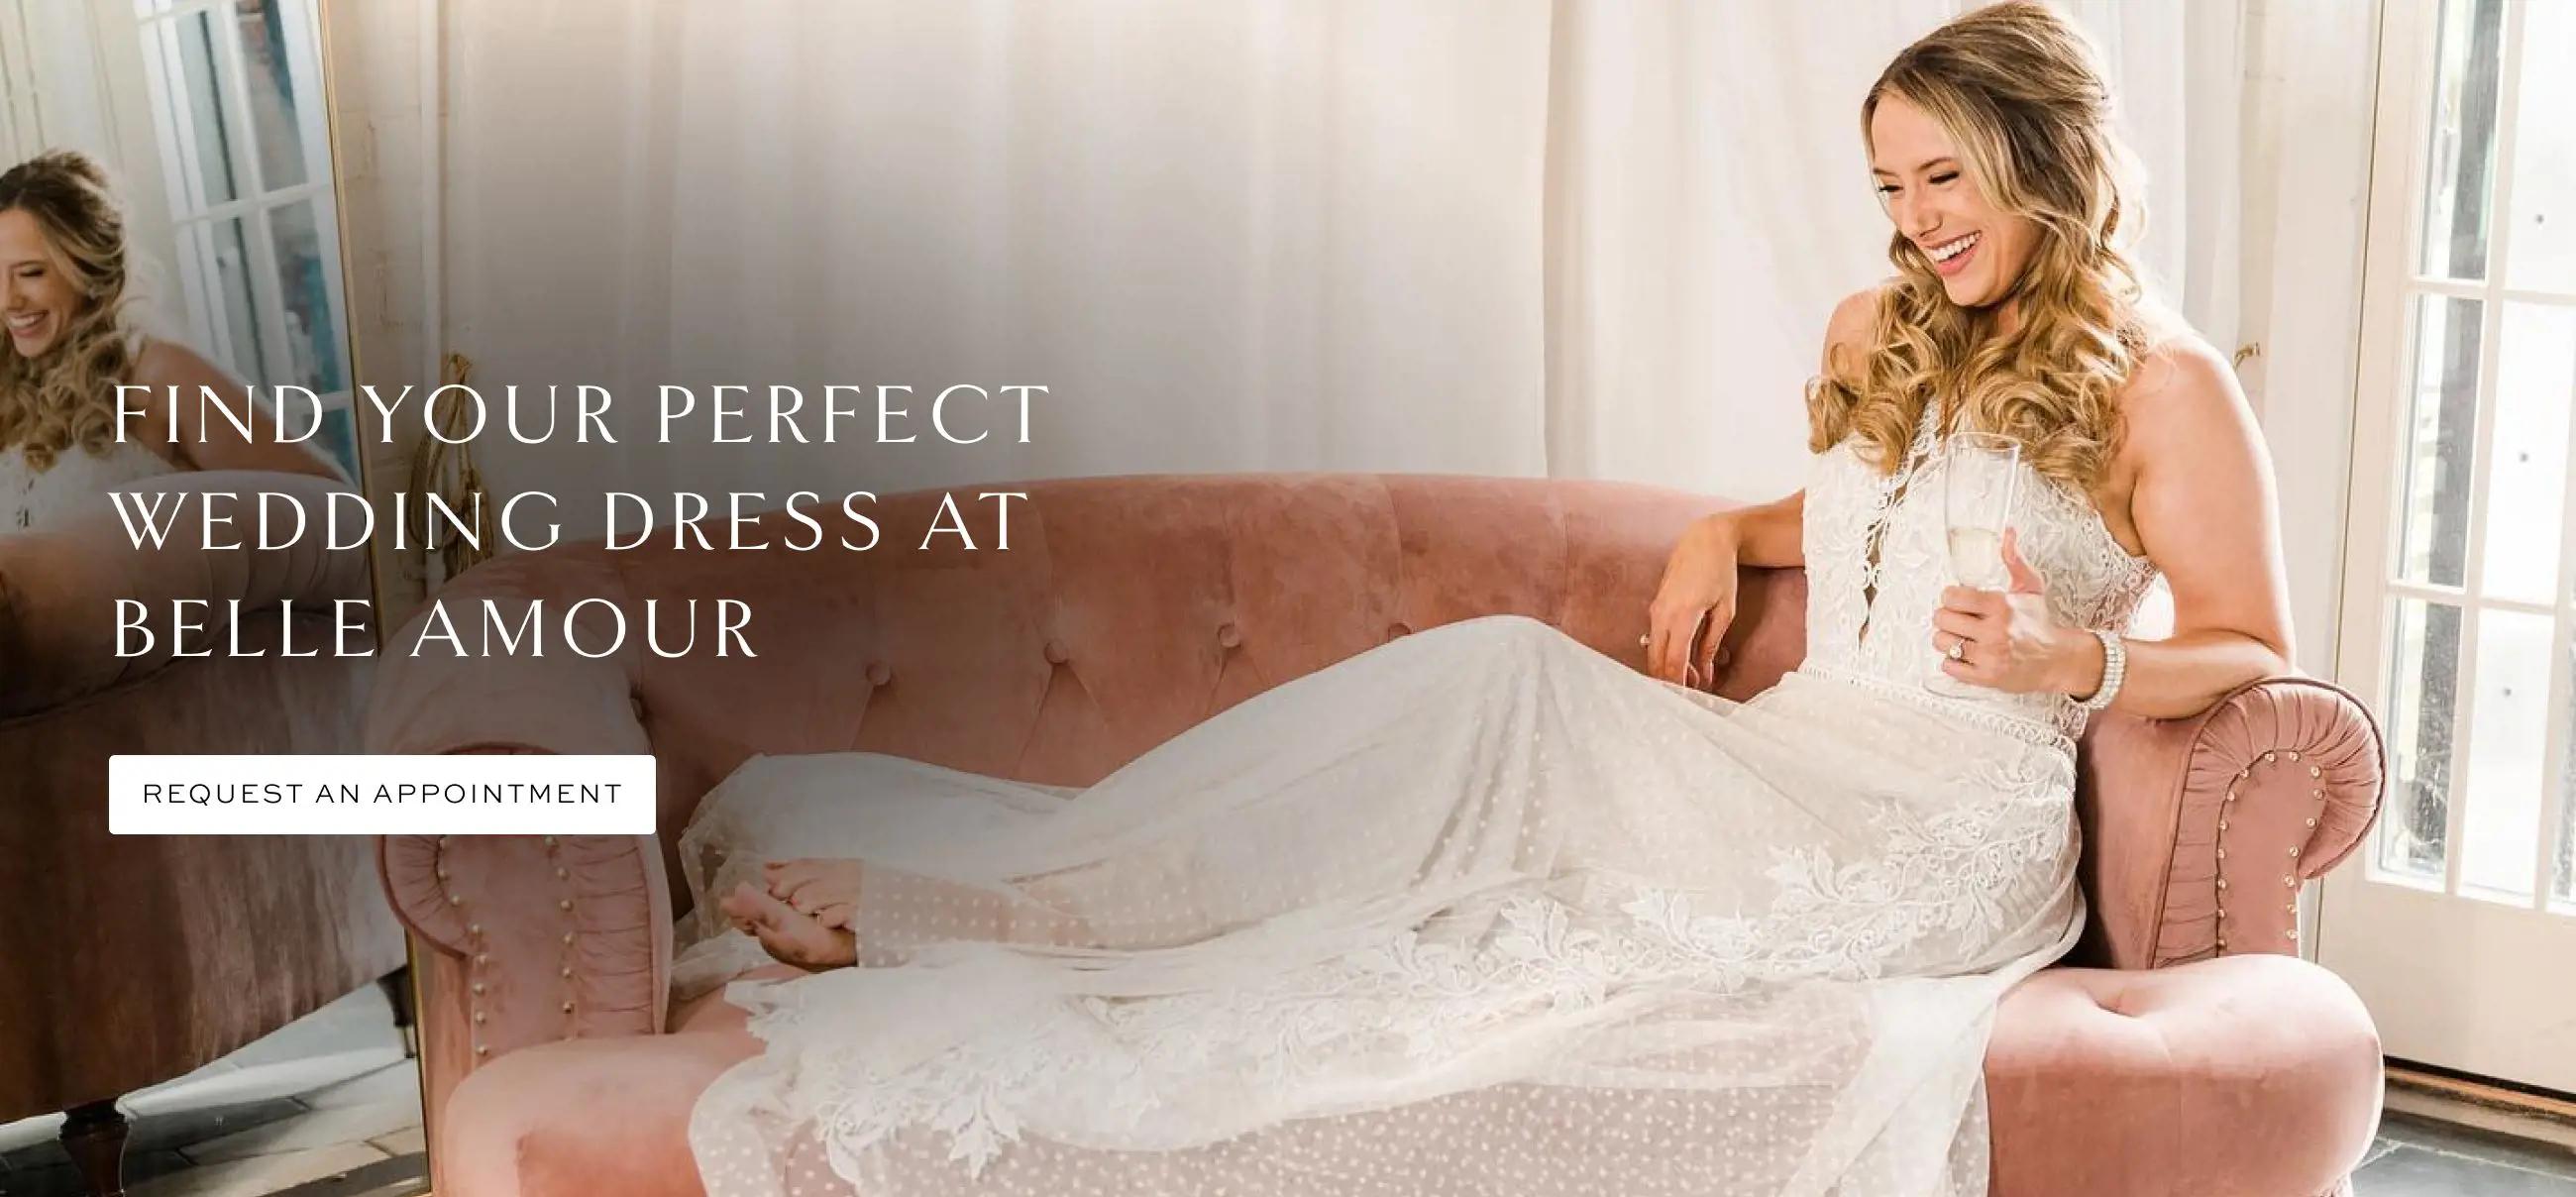 Find your perfect wedding dress at Belle Amour Bridal. Desktop image.